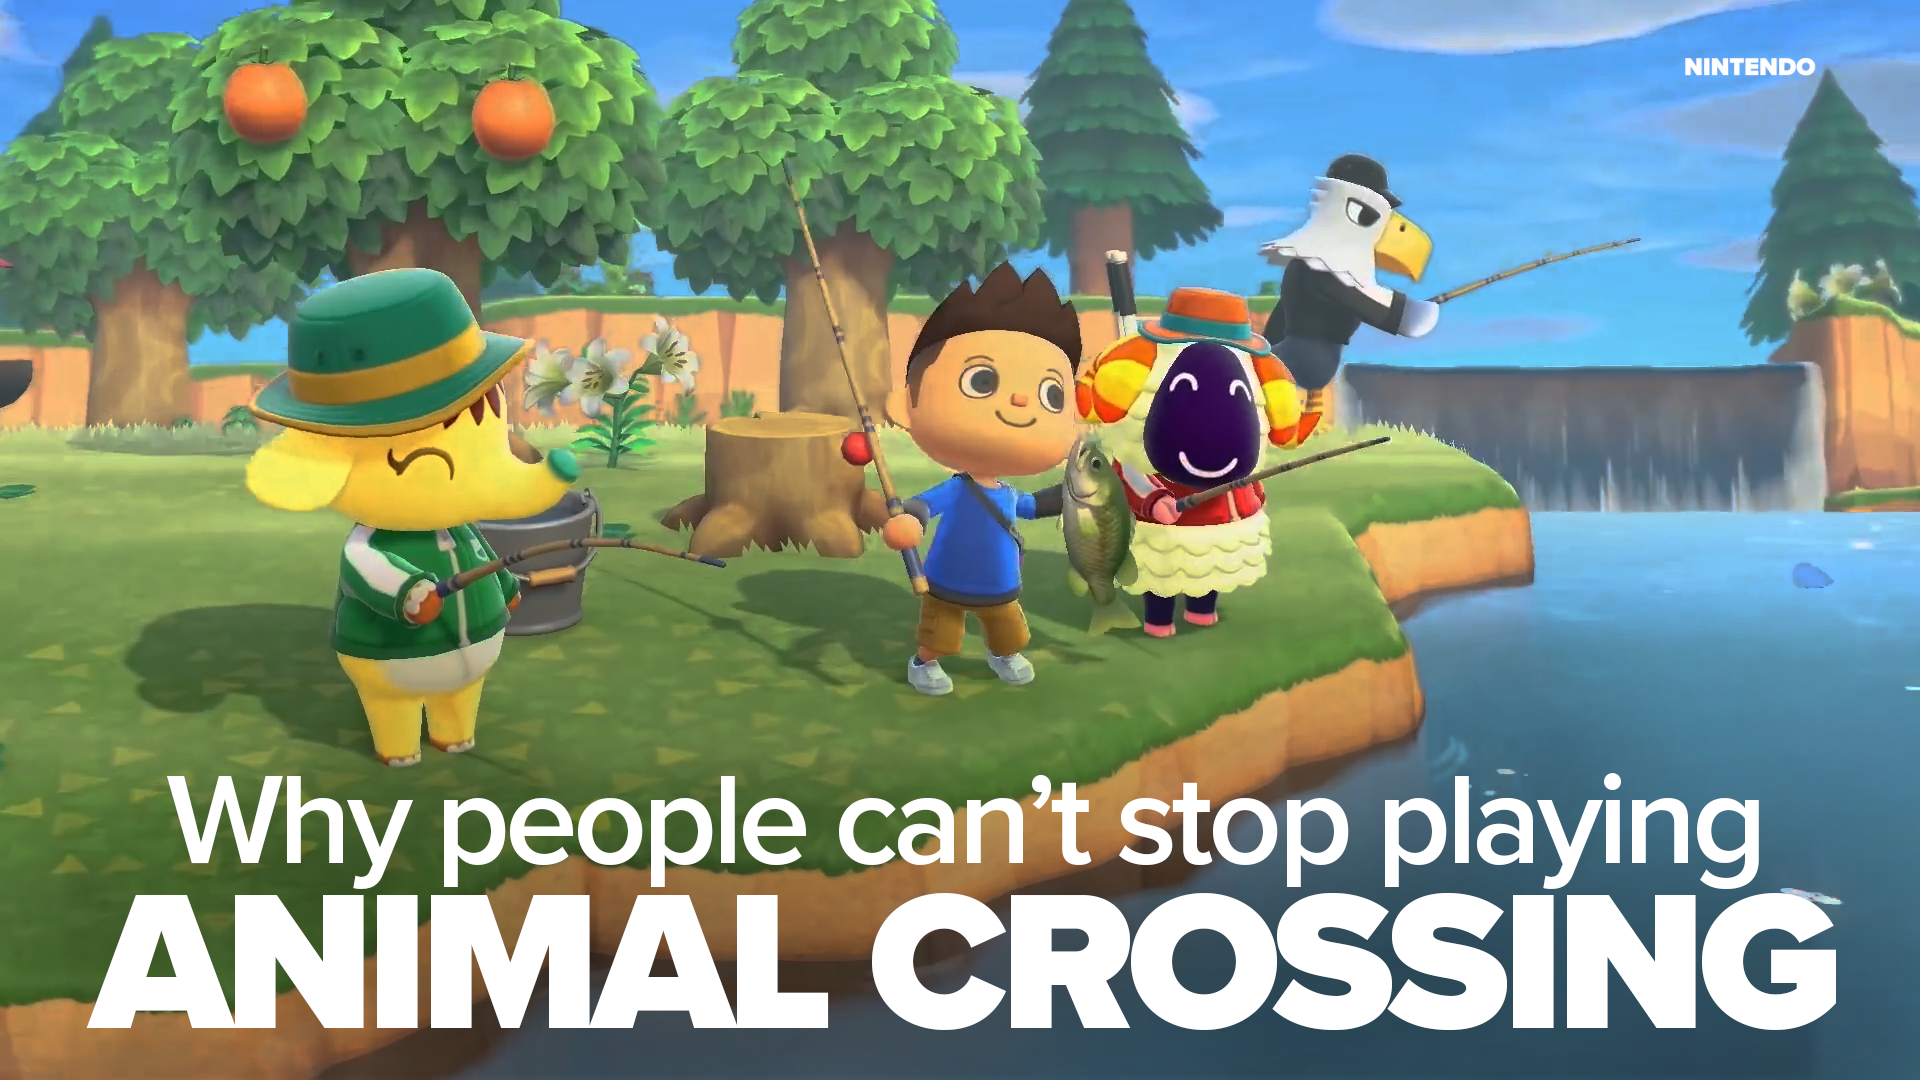 Animal Crossing: New Horizons' is the coronavirus distraction we needed